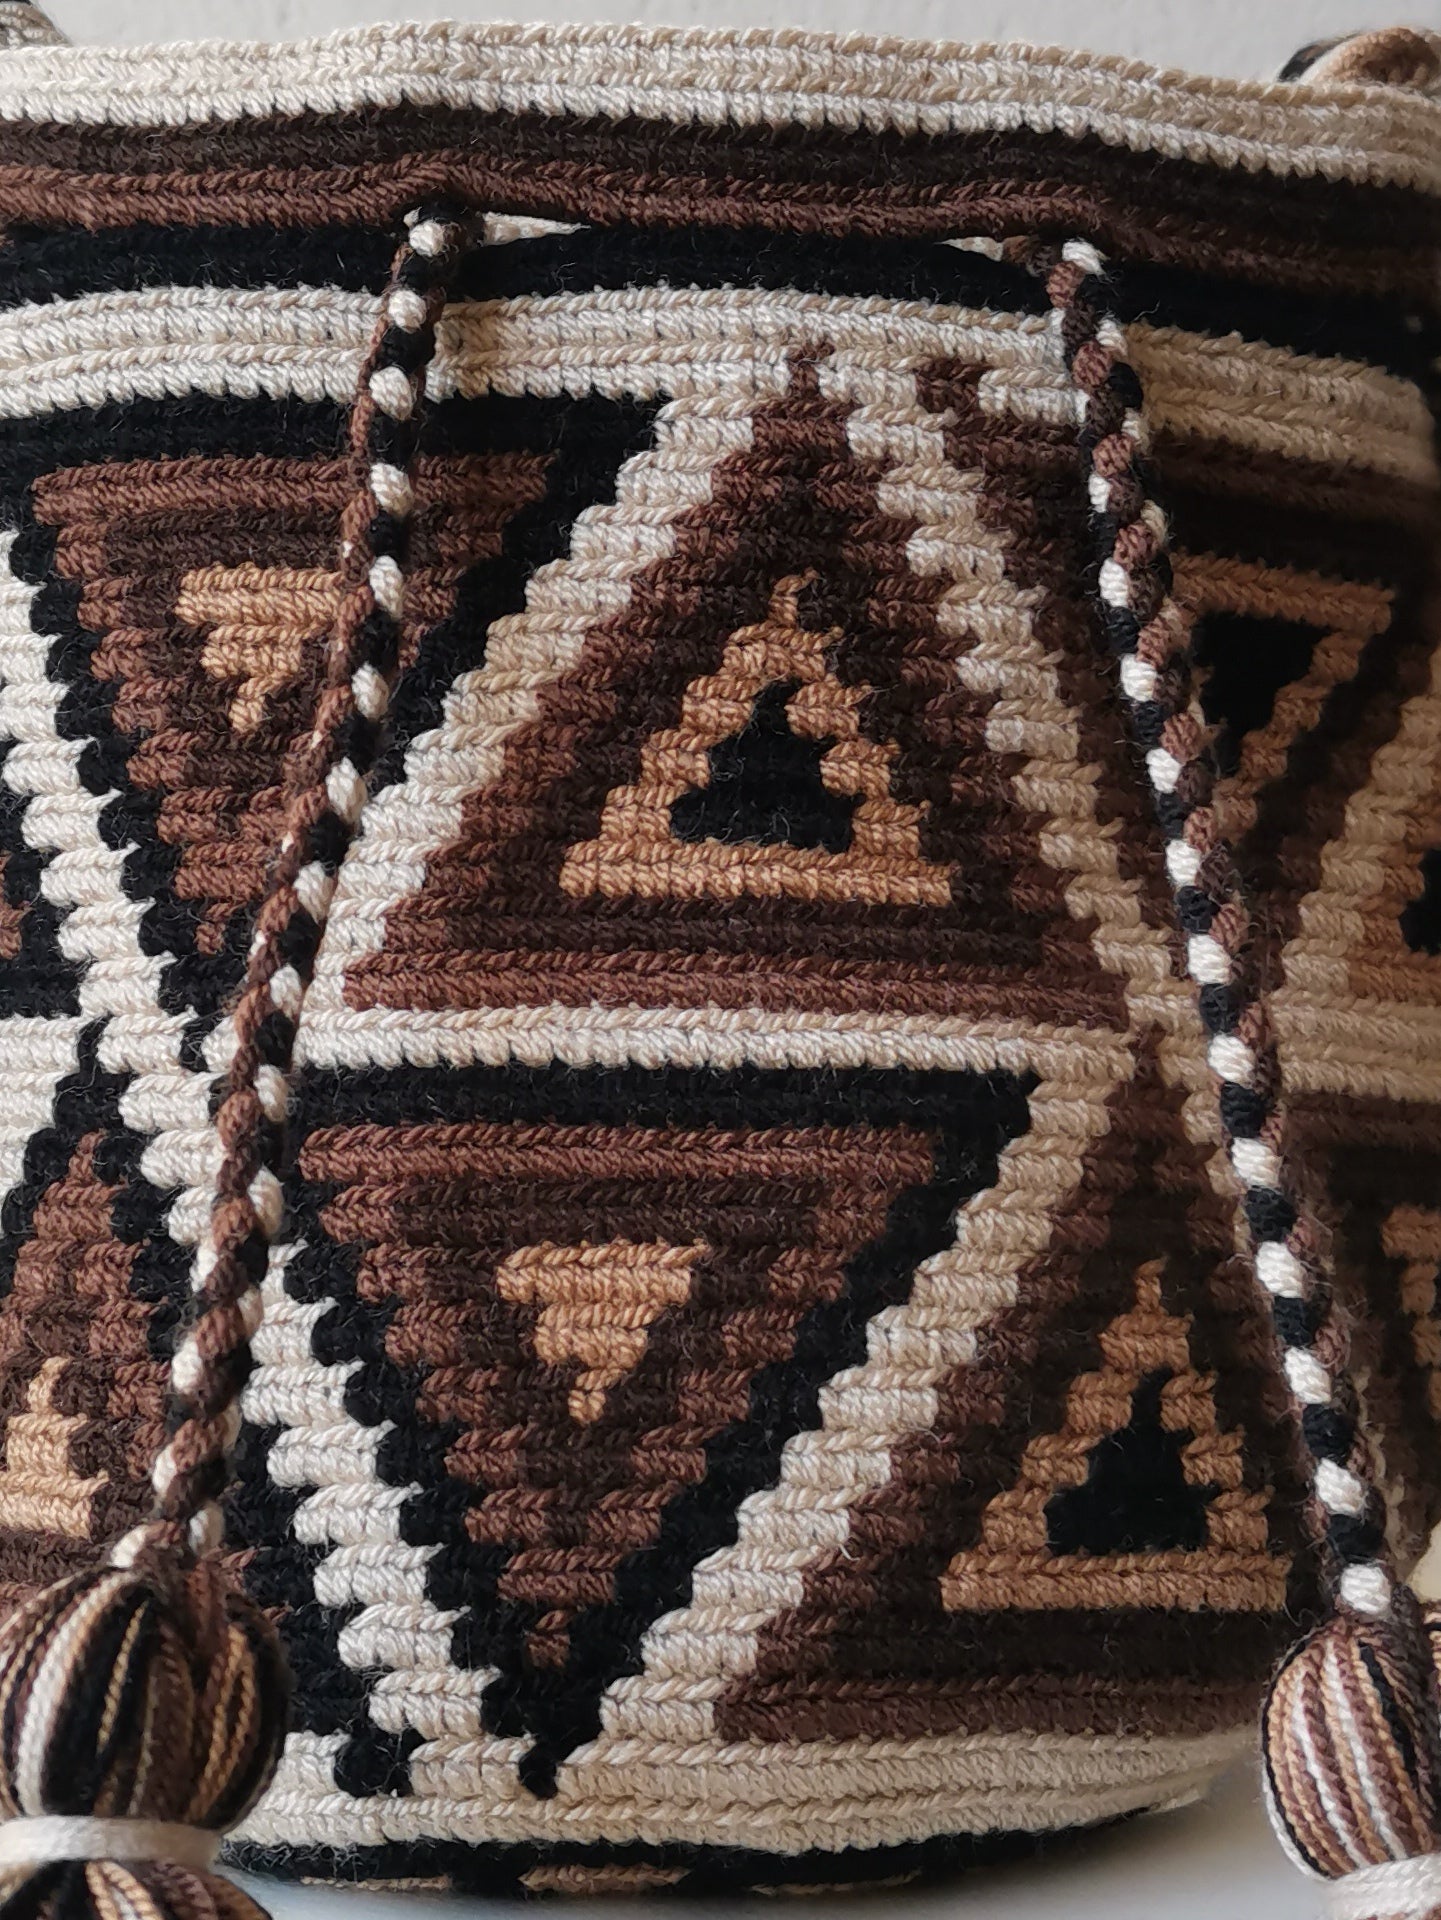 Brown and beige MINI mochila shoulder bag